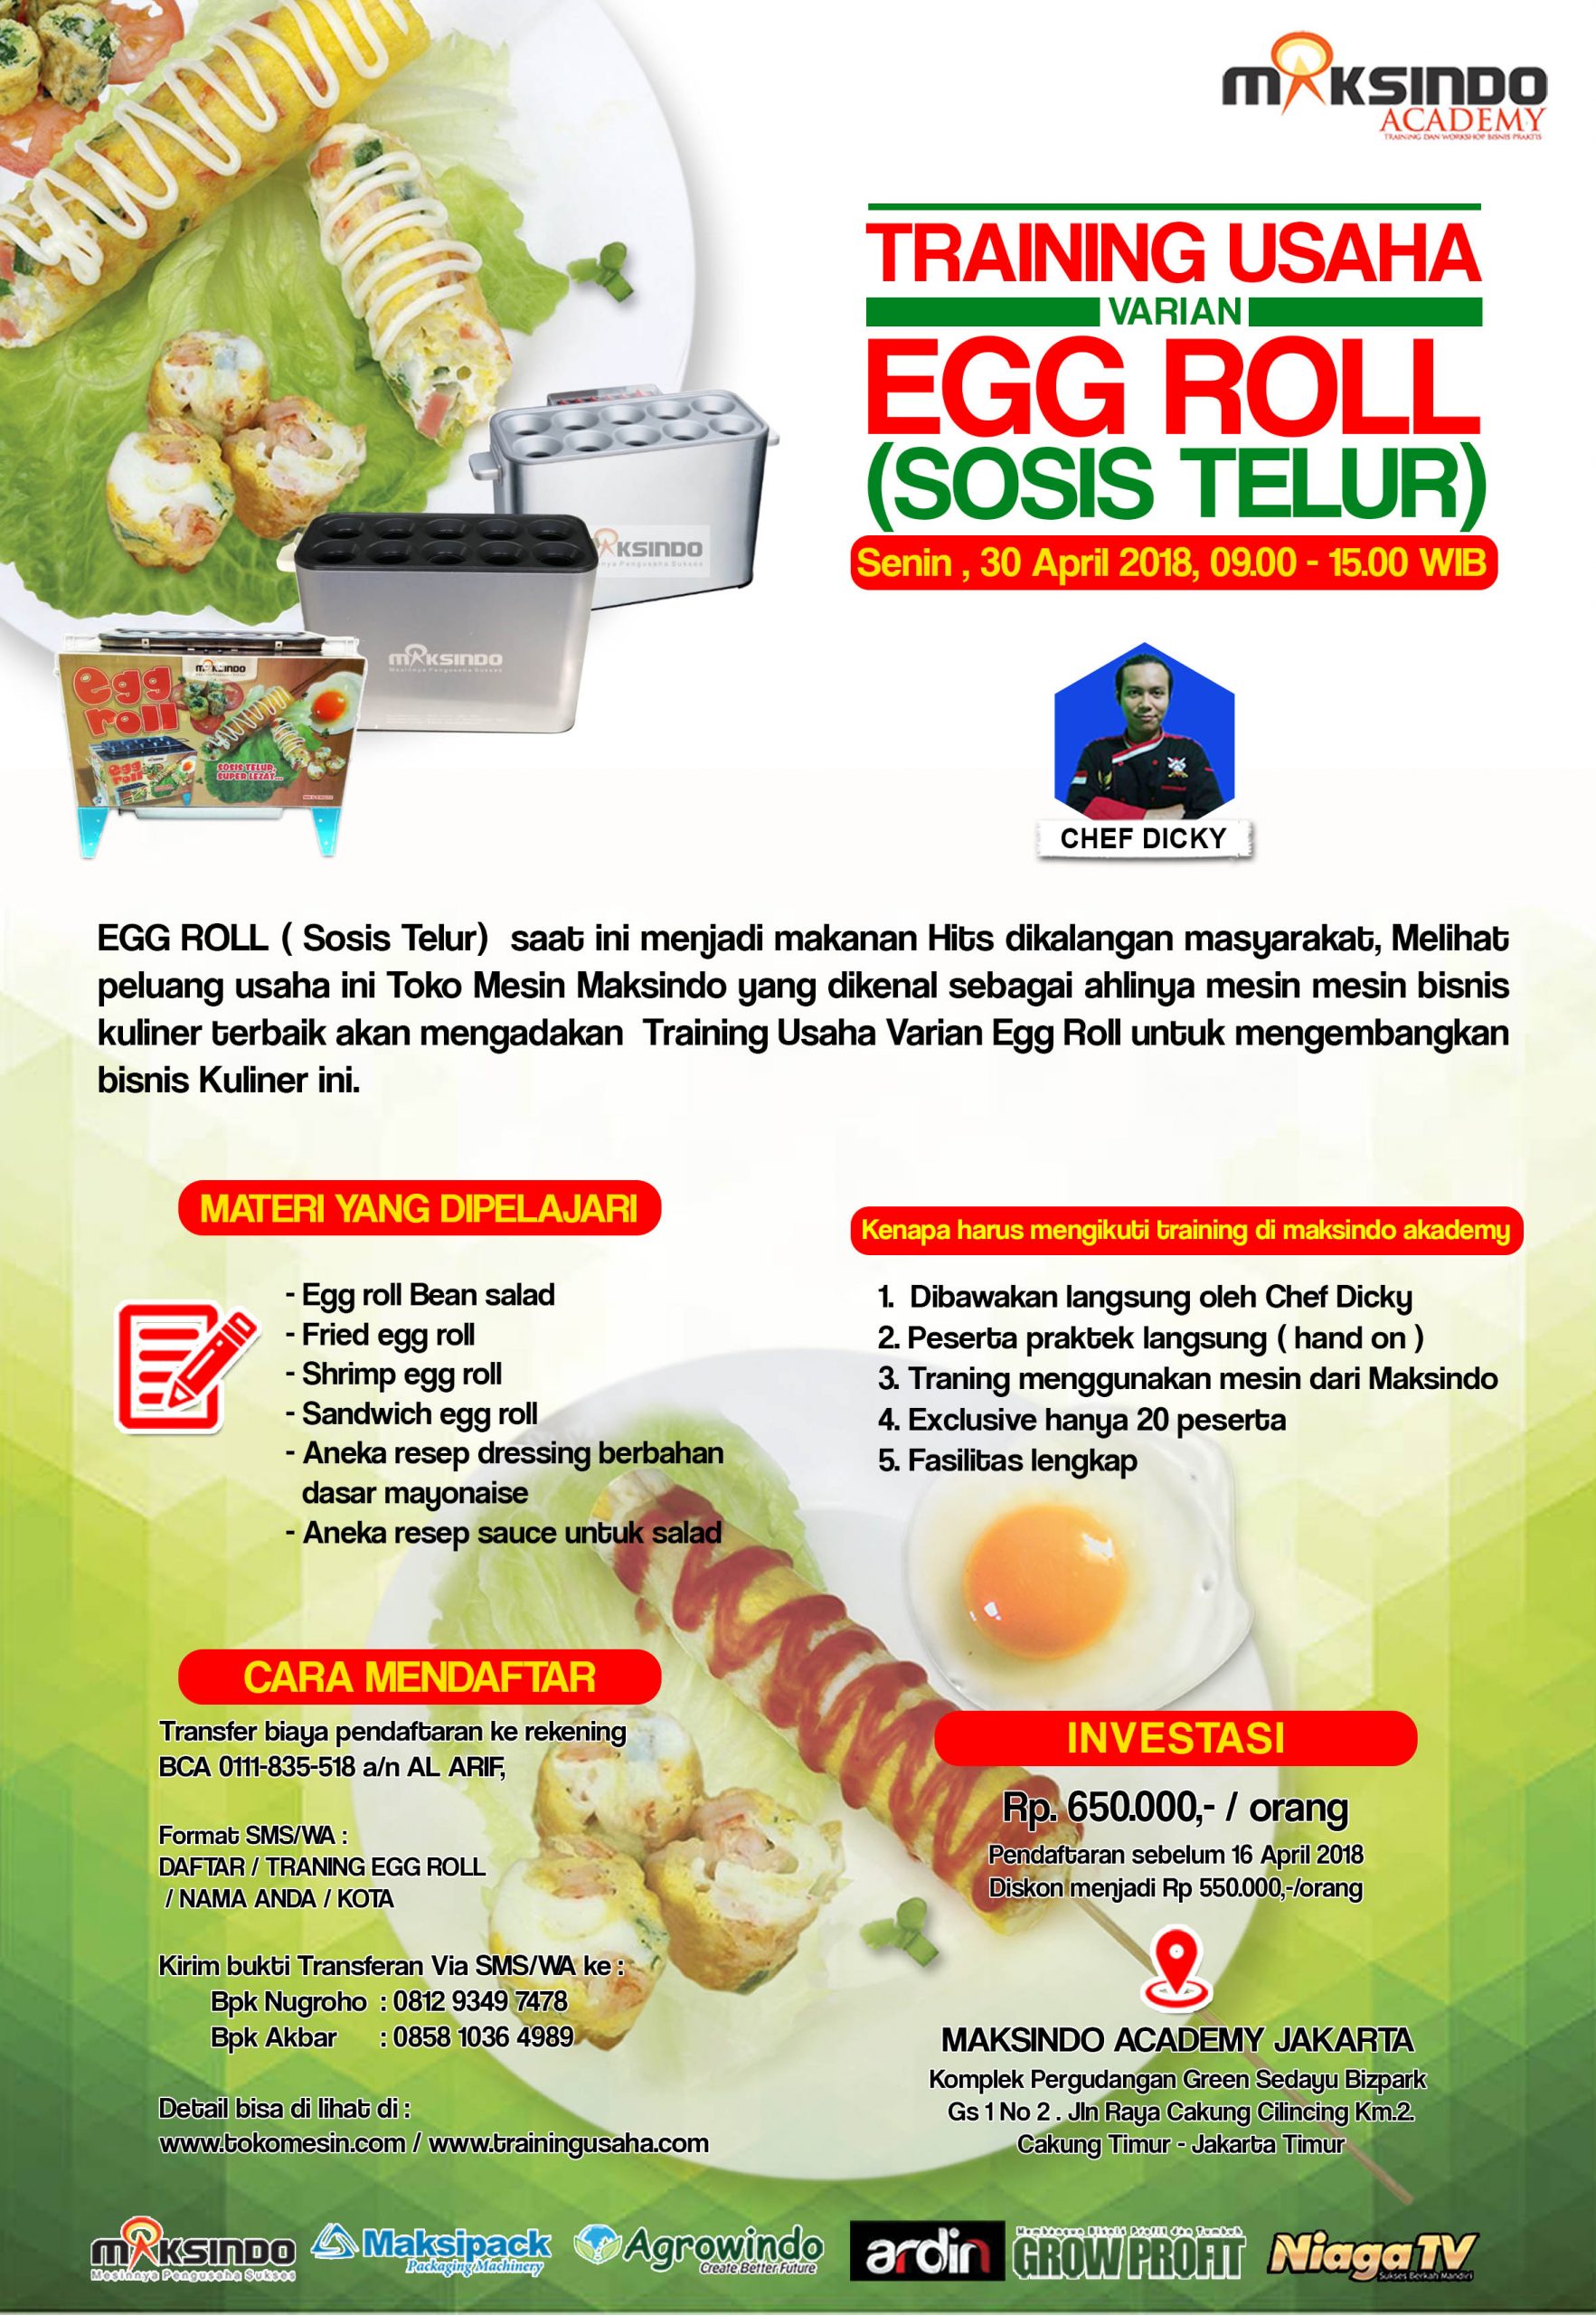 Training Usaha Varian Egg Roll (Sosis Telur), 30 April 2018